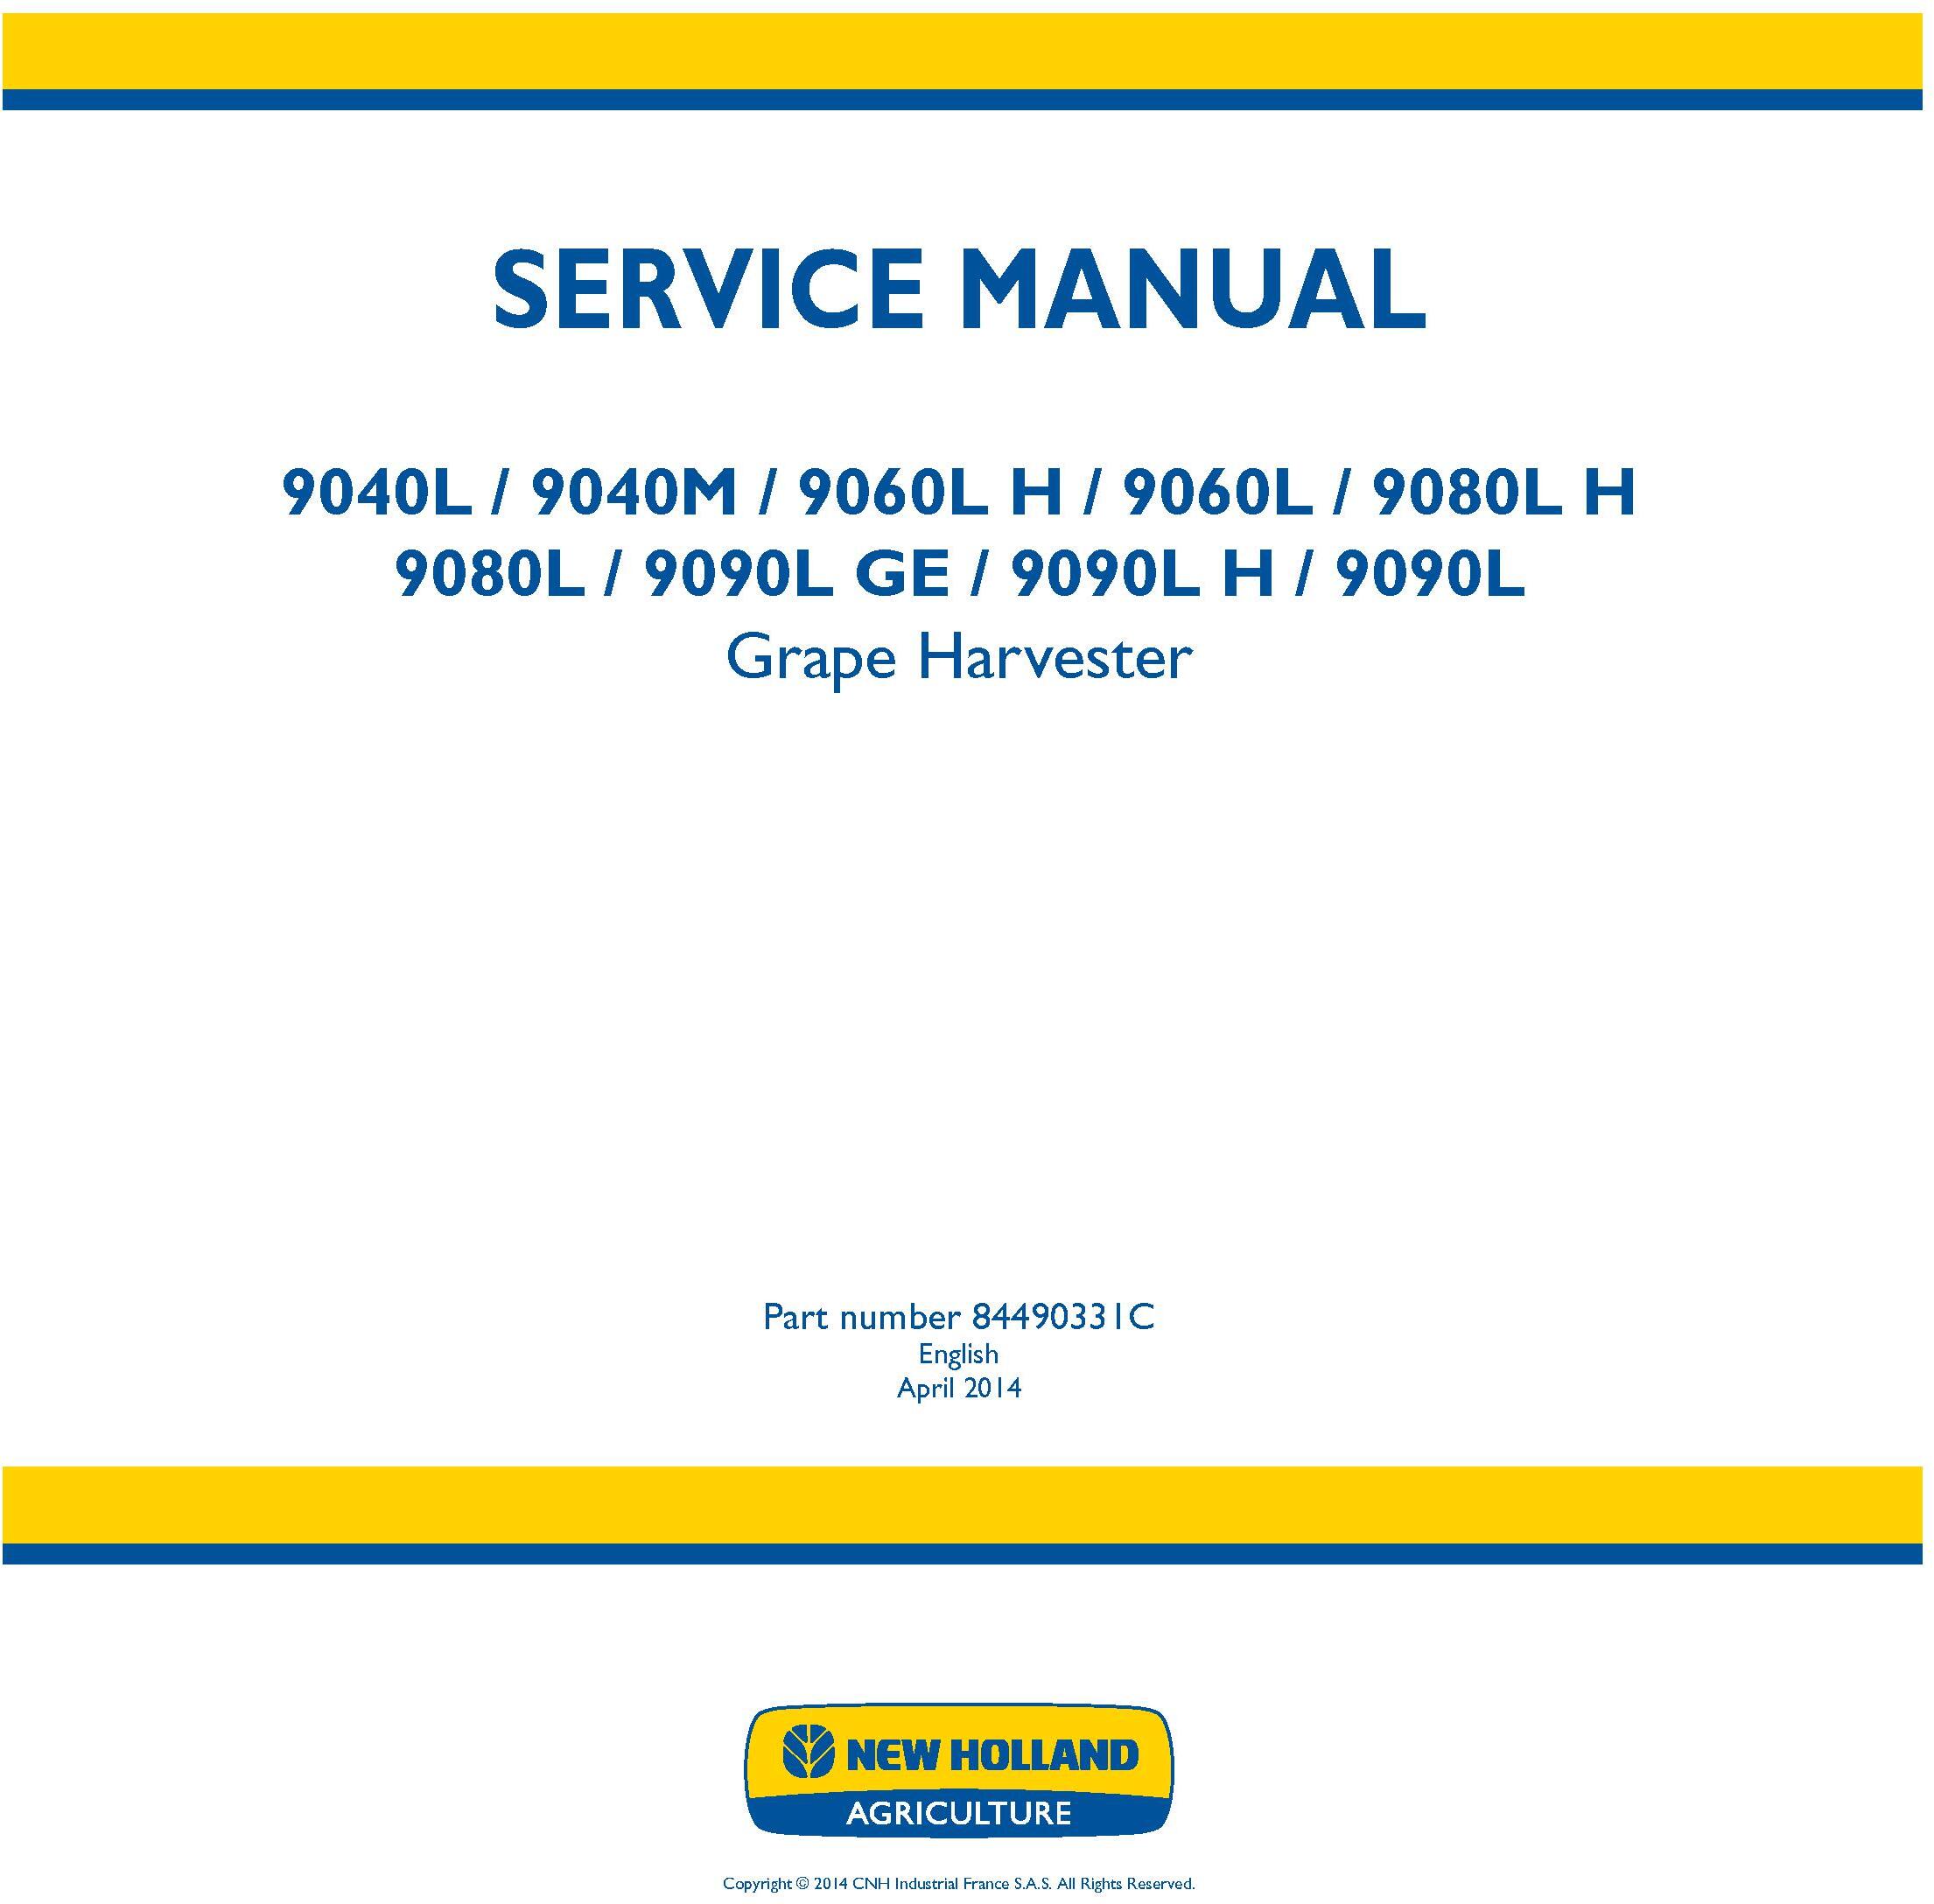 New Holland 9040L, 9040M, 9060L (H), 9080L (H), 9090L (H,GE) Grape Harvester Service Manual - 20019